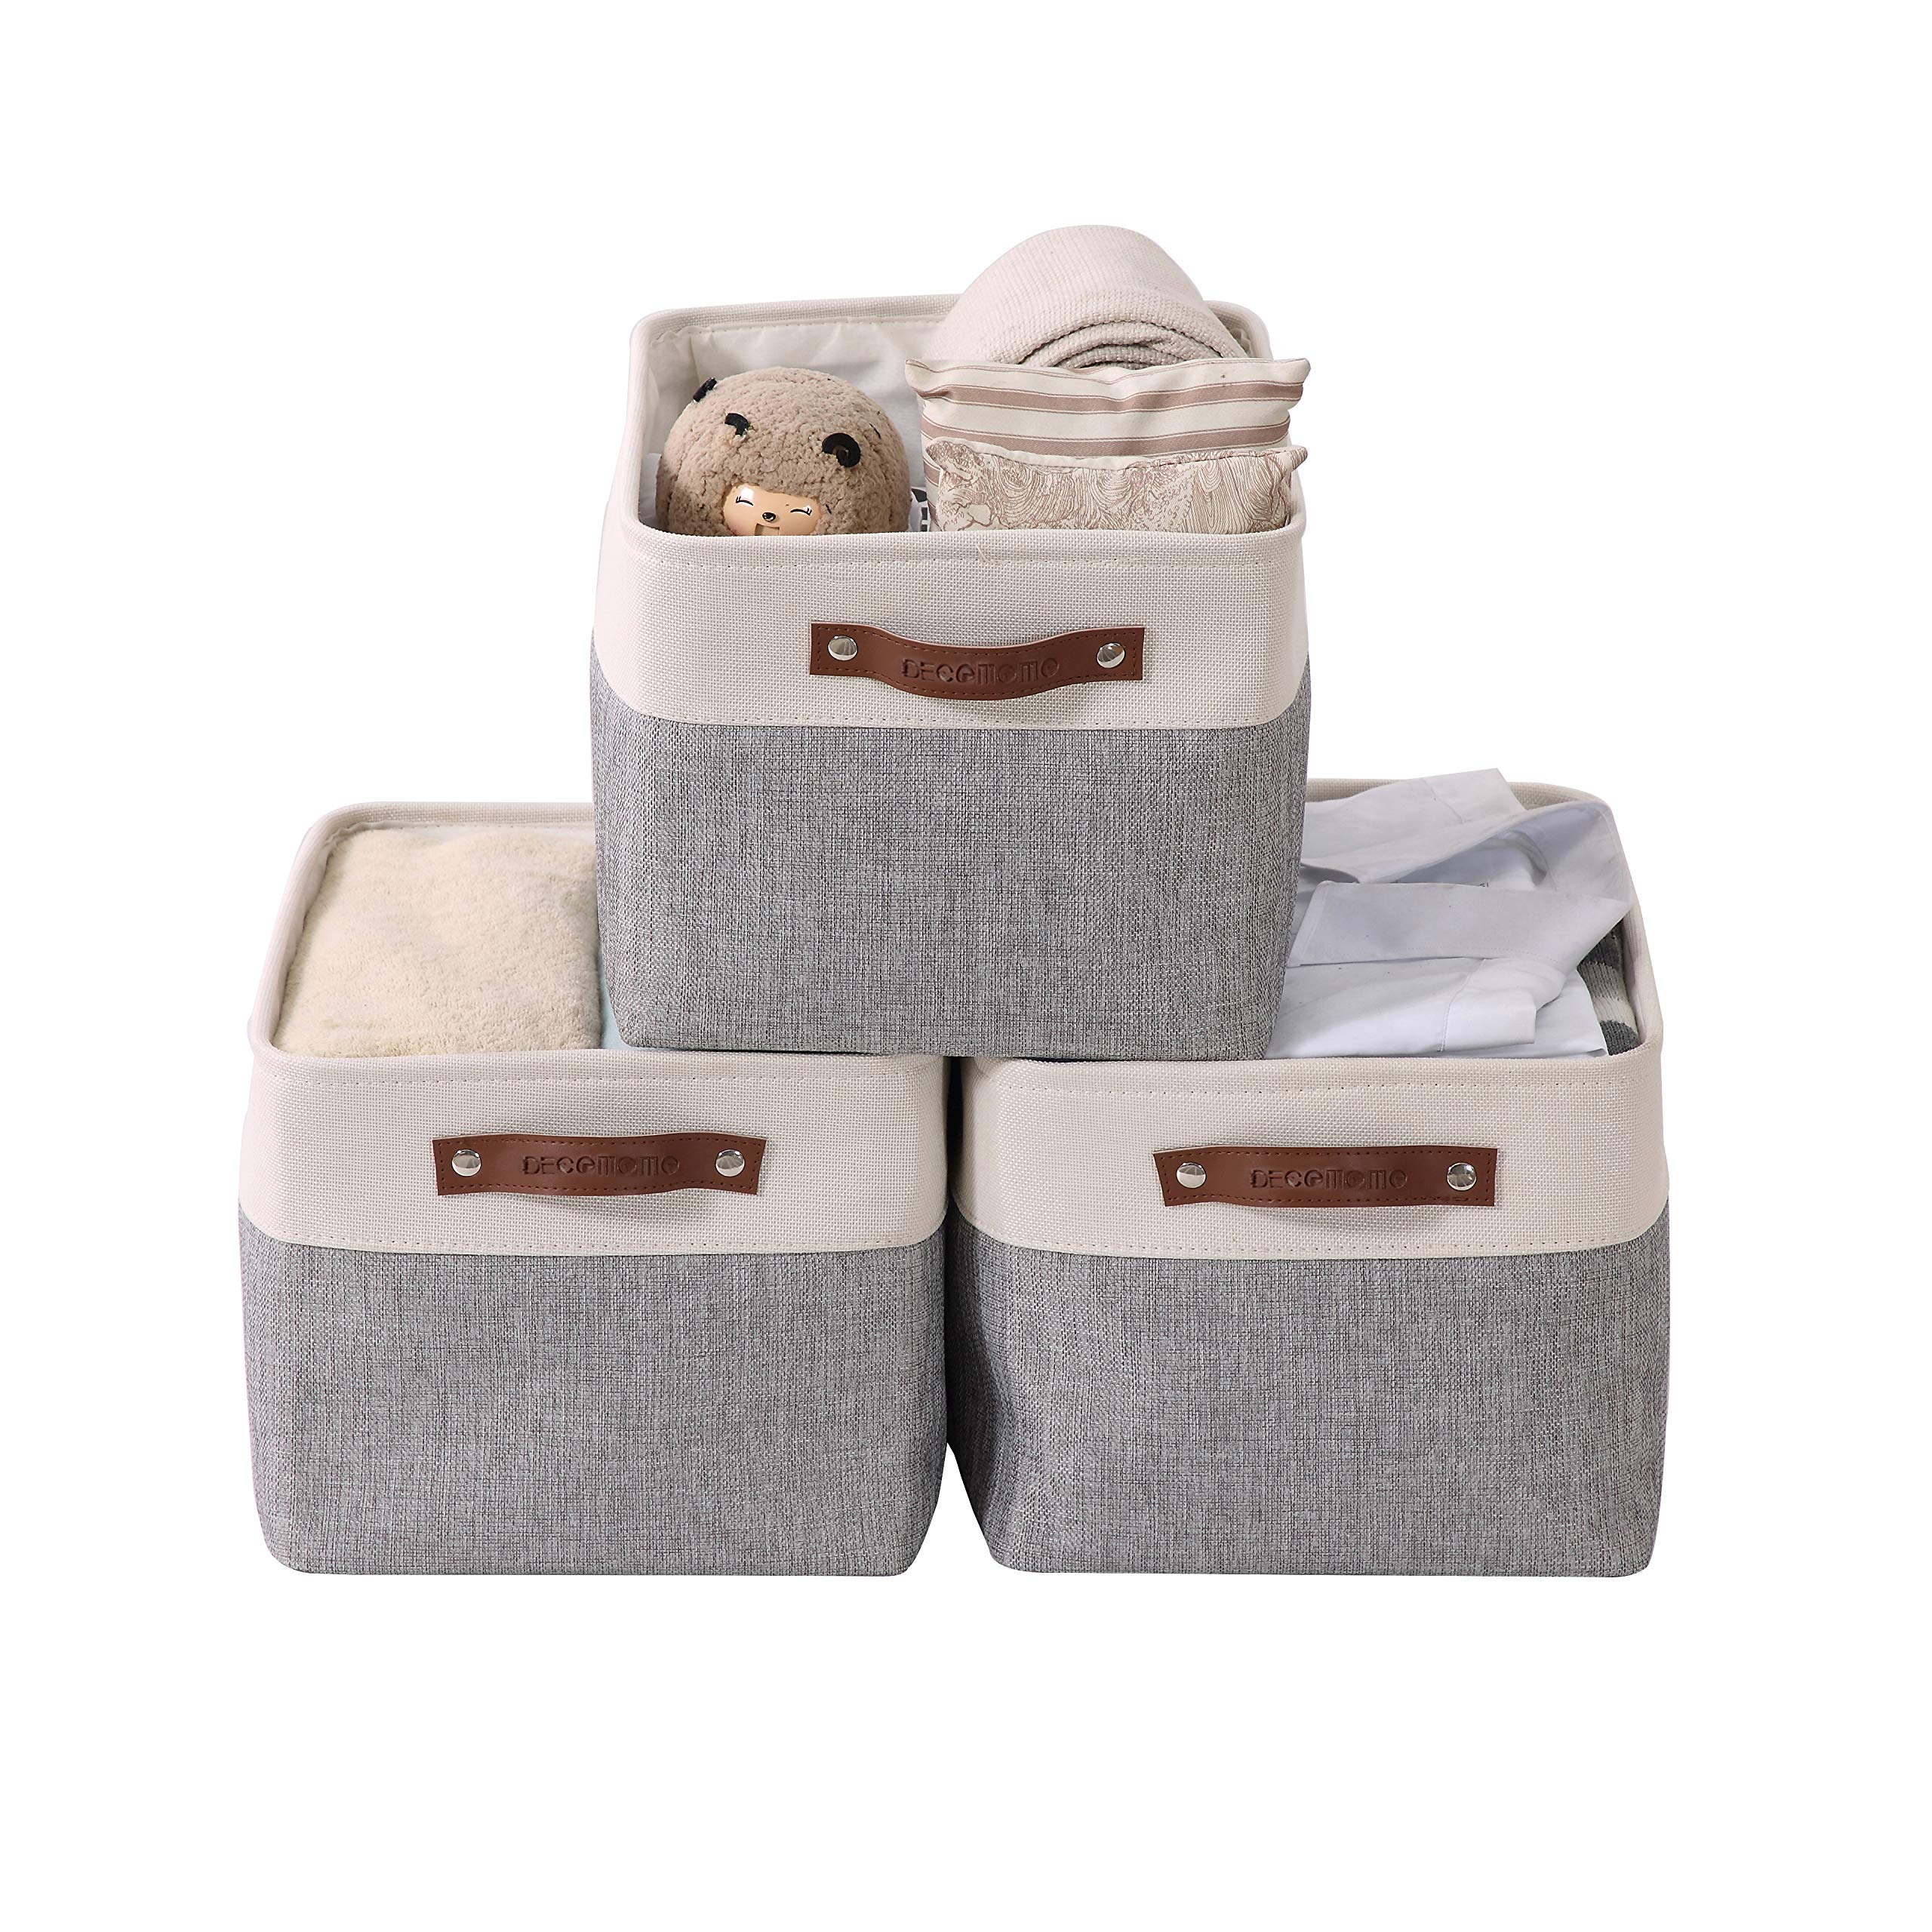 Large Fabric Storage Basket Cube W/Handles for Organizing